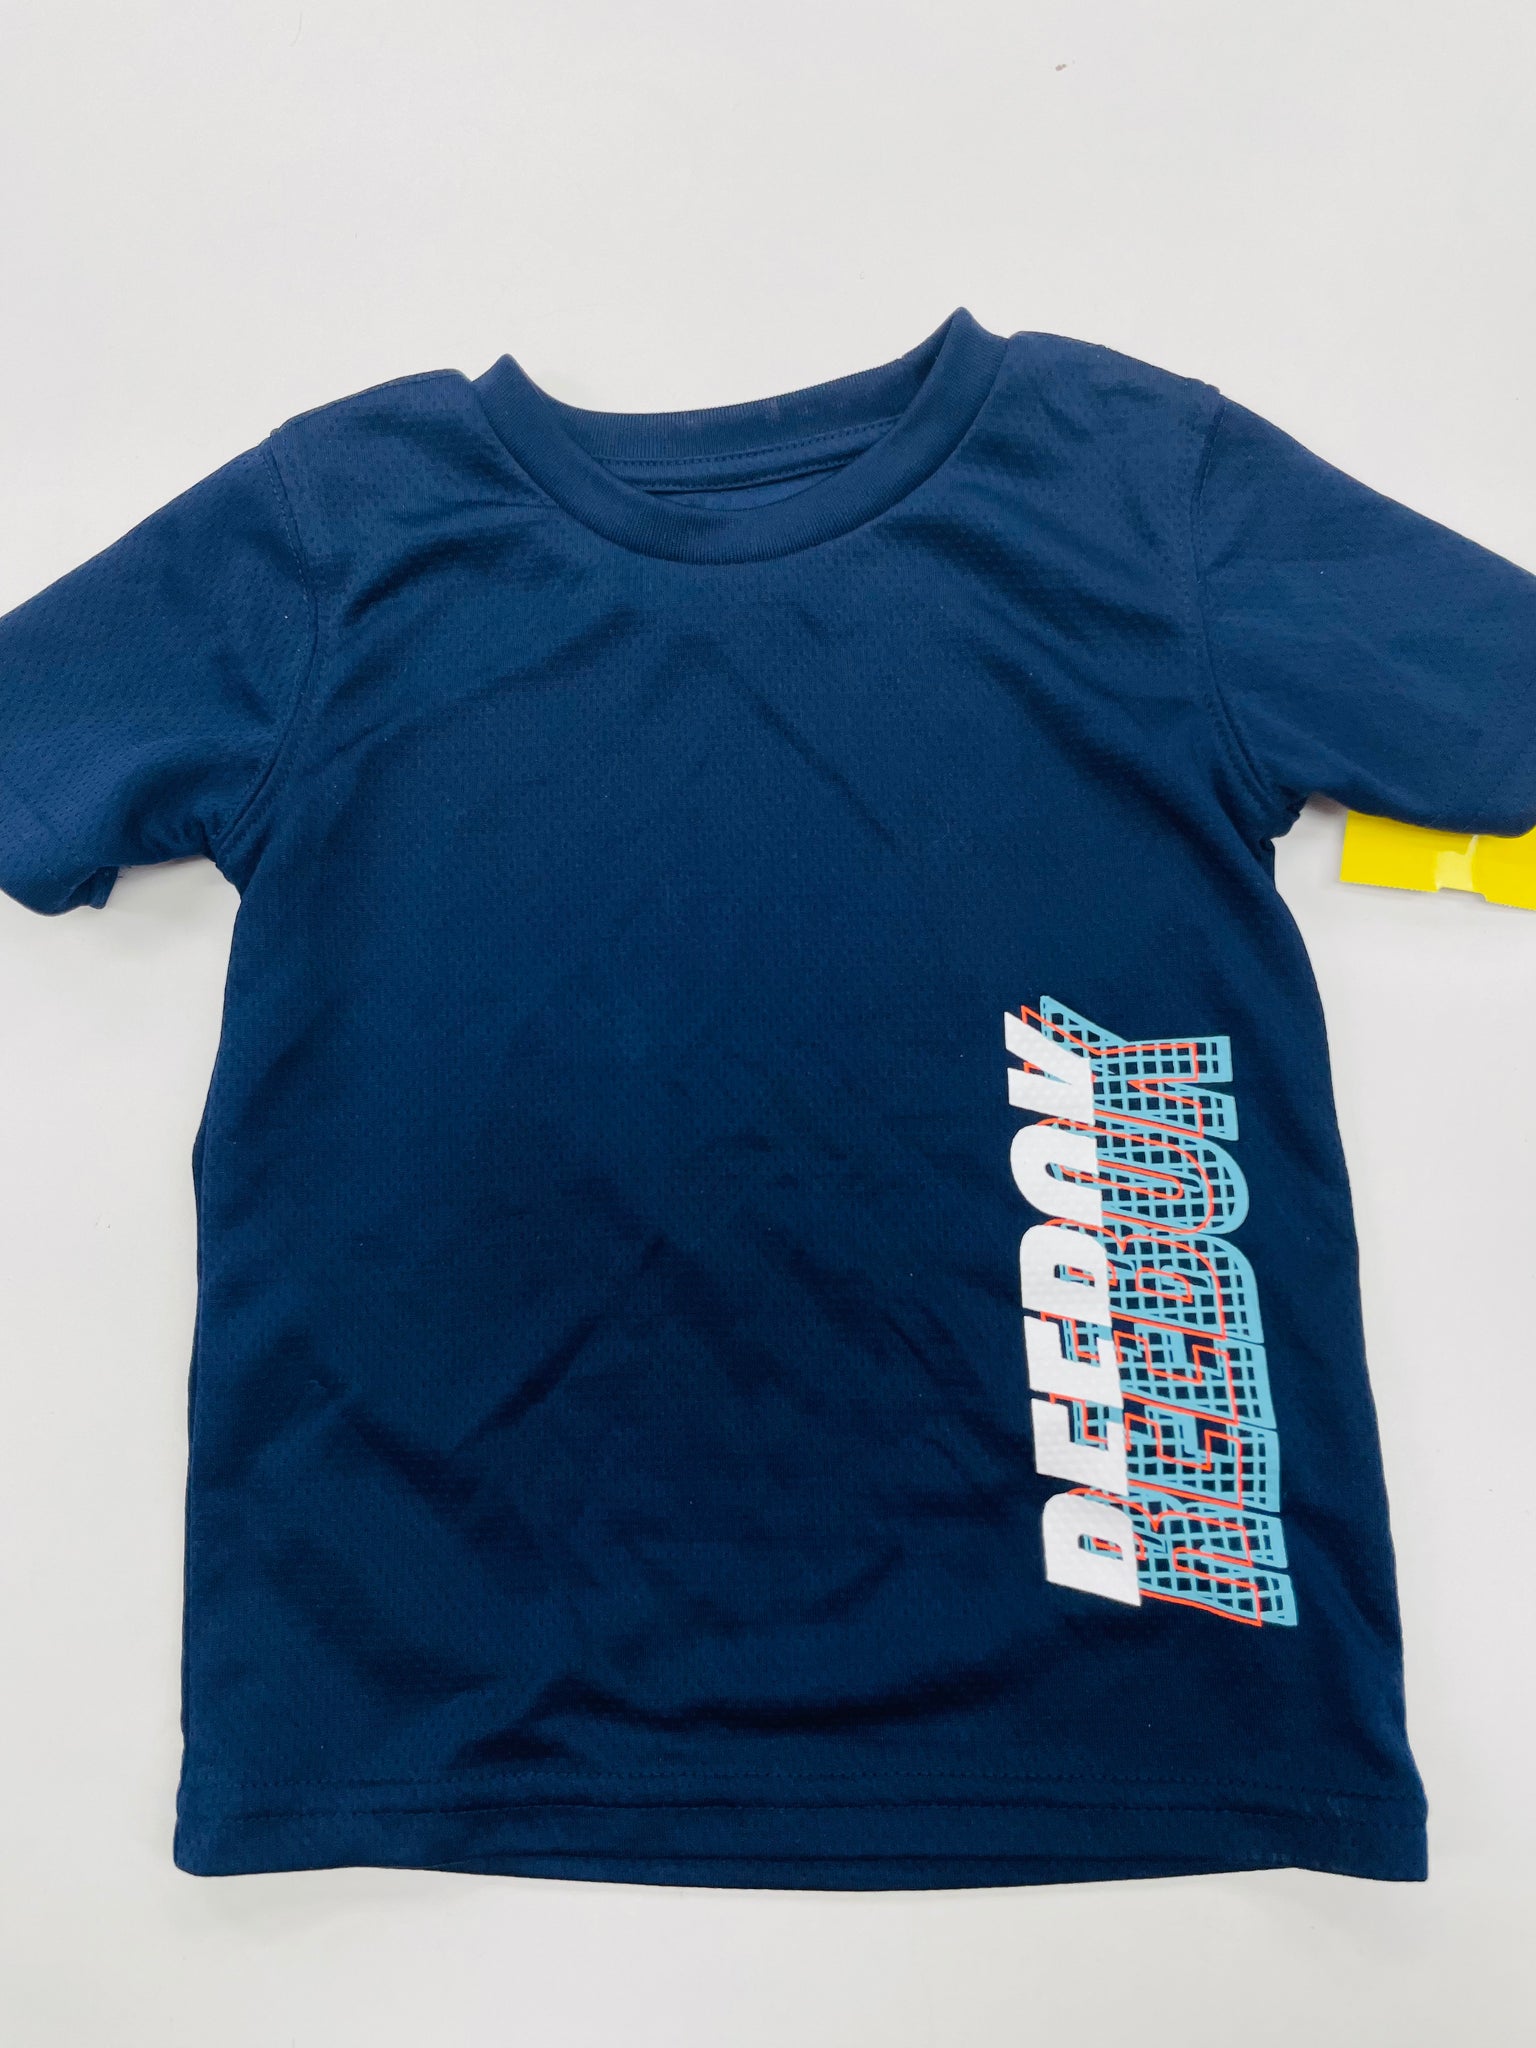 Toddler Boys Reebok Athletic Shirt 3T